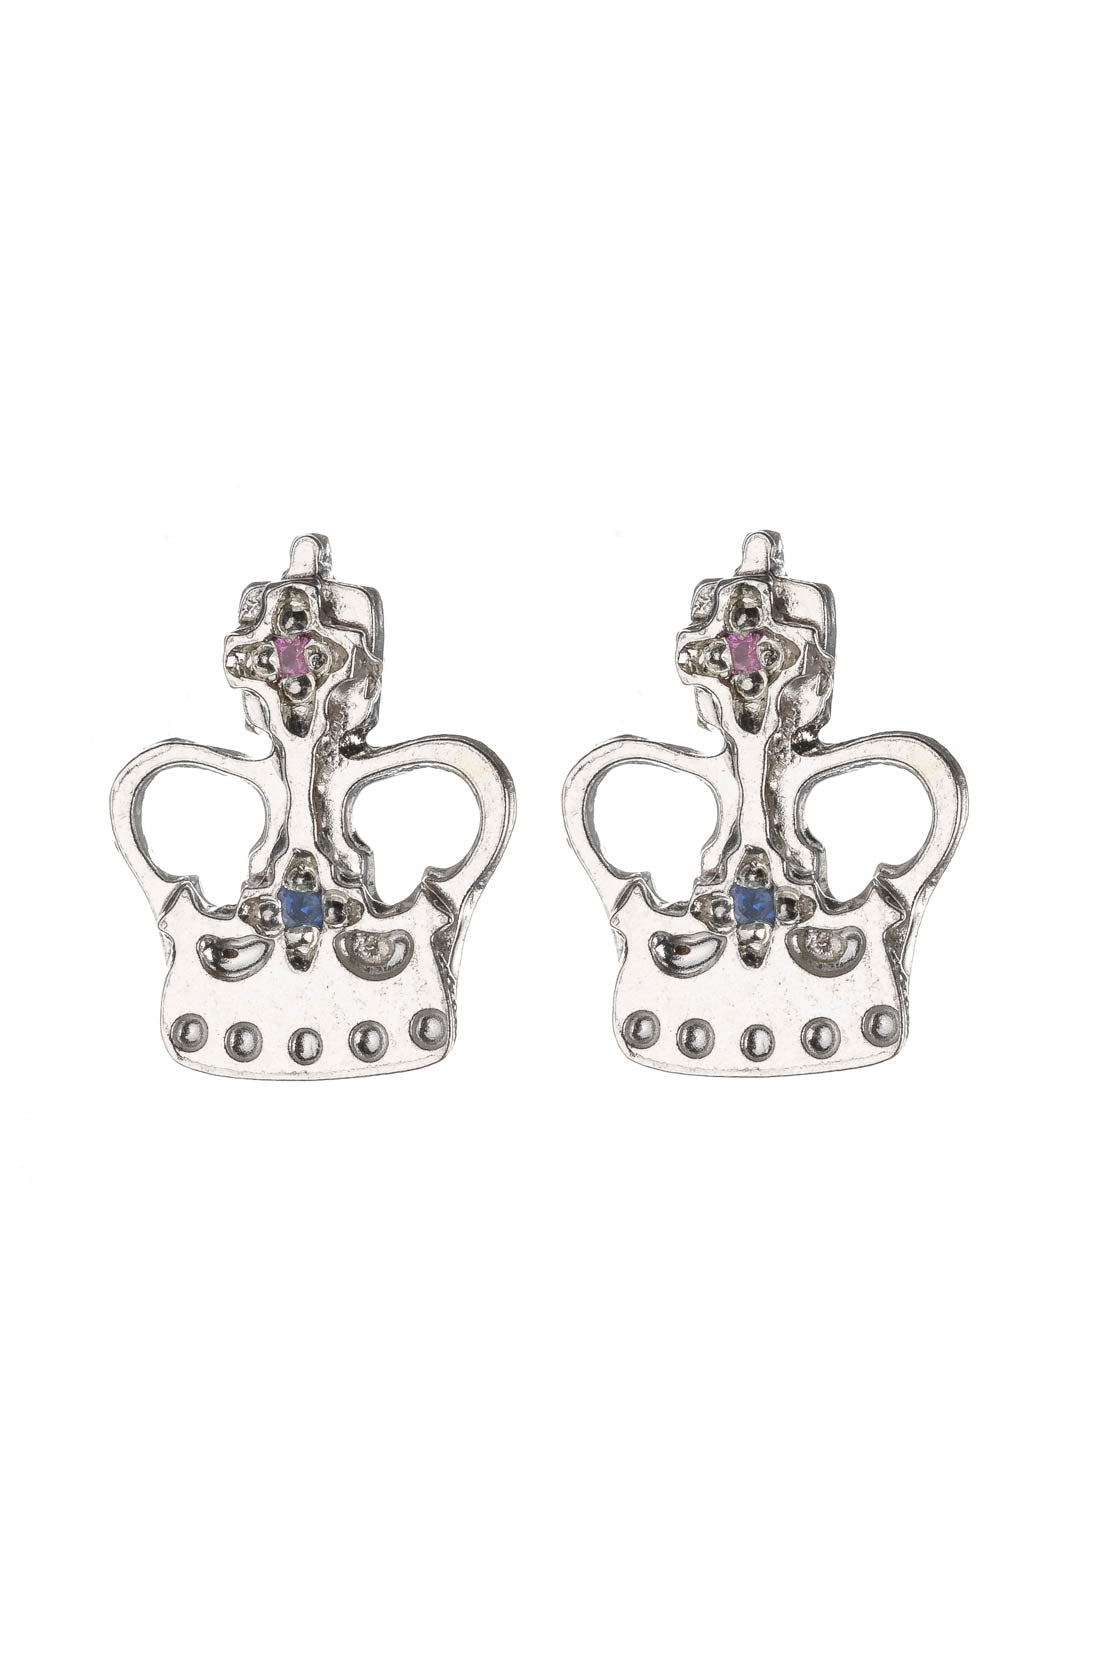 Crown Stud Earrings In Sterling Silver And Gold Vermeil With Gemstones